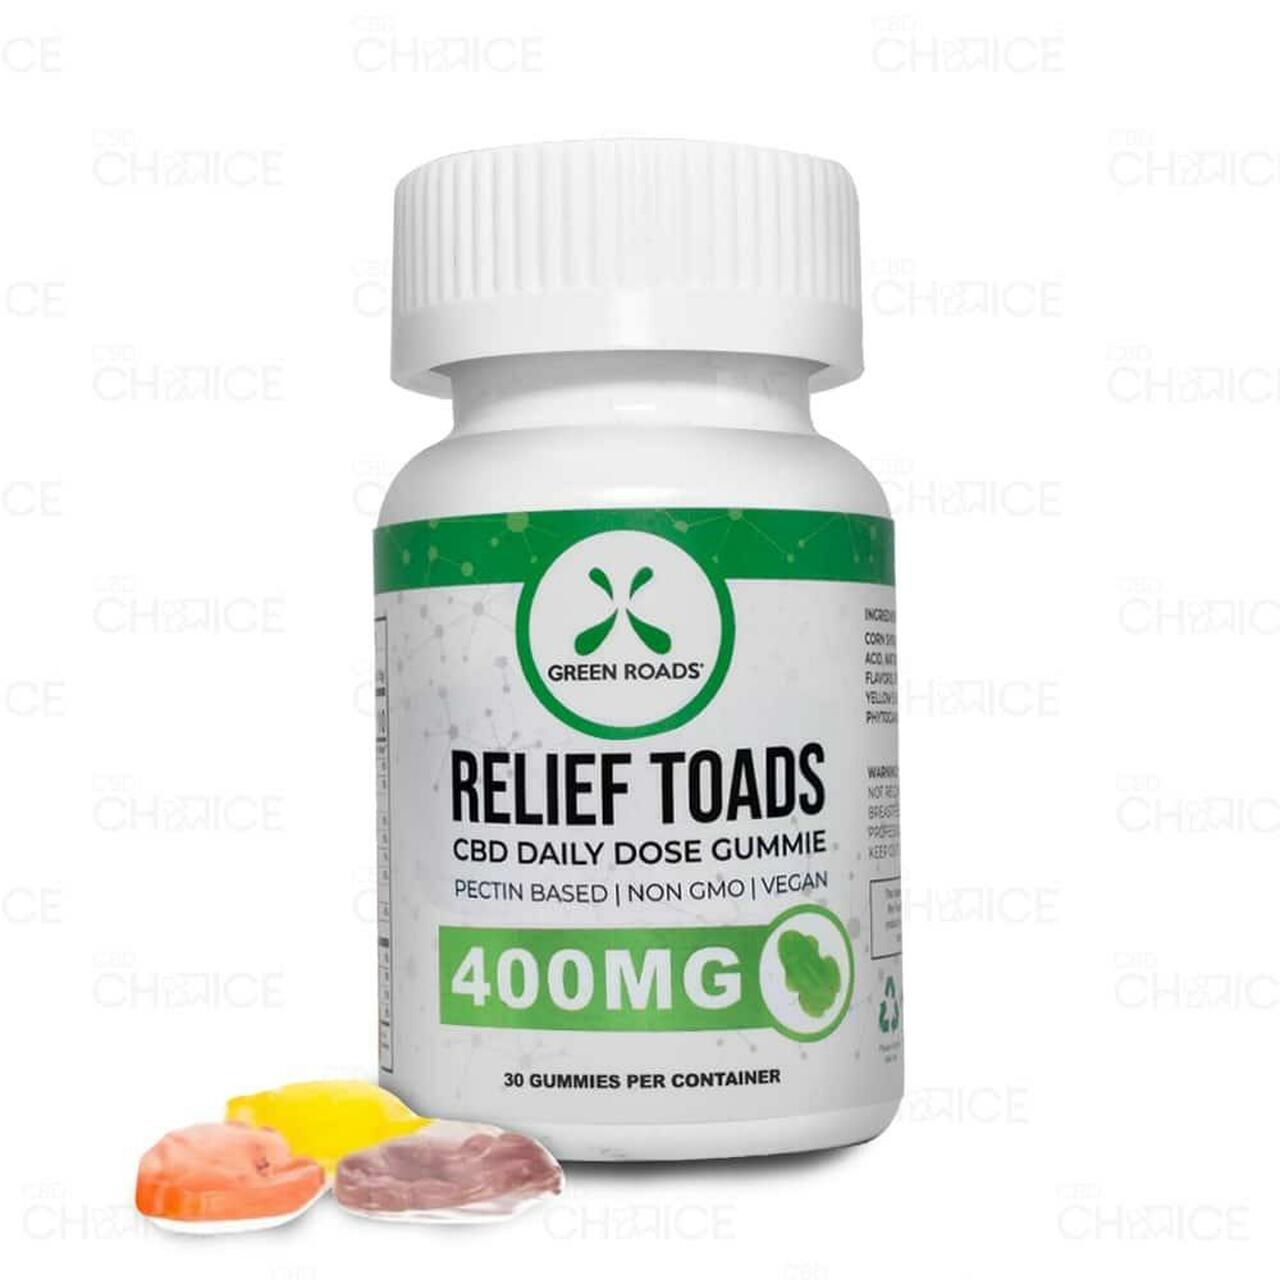 Relief Toads CBD Gummies